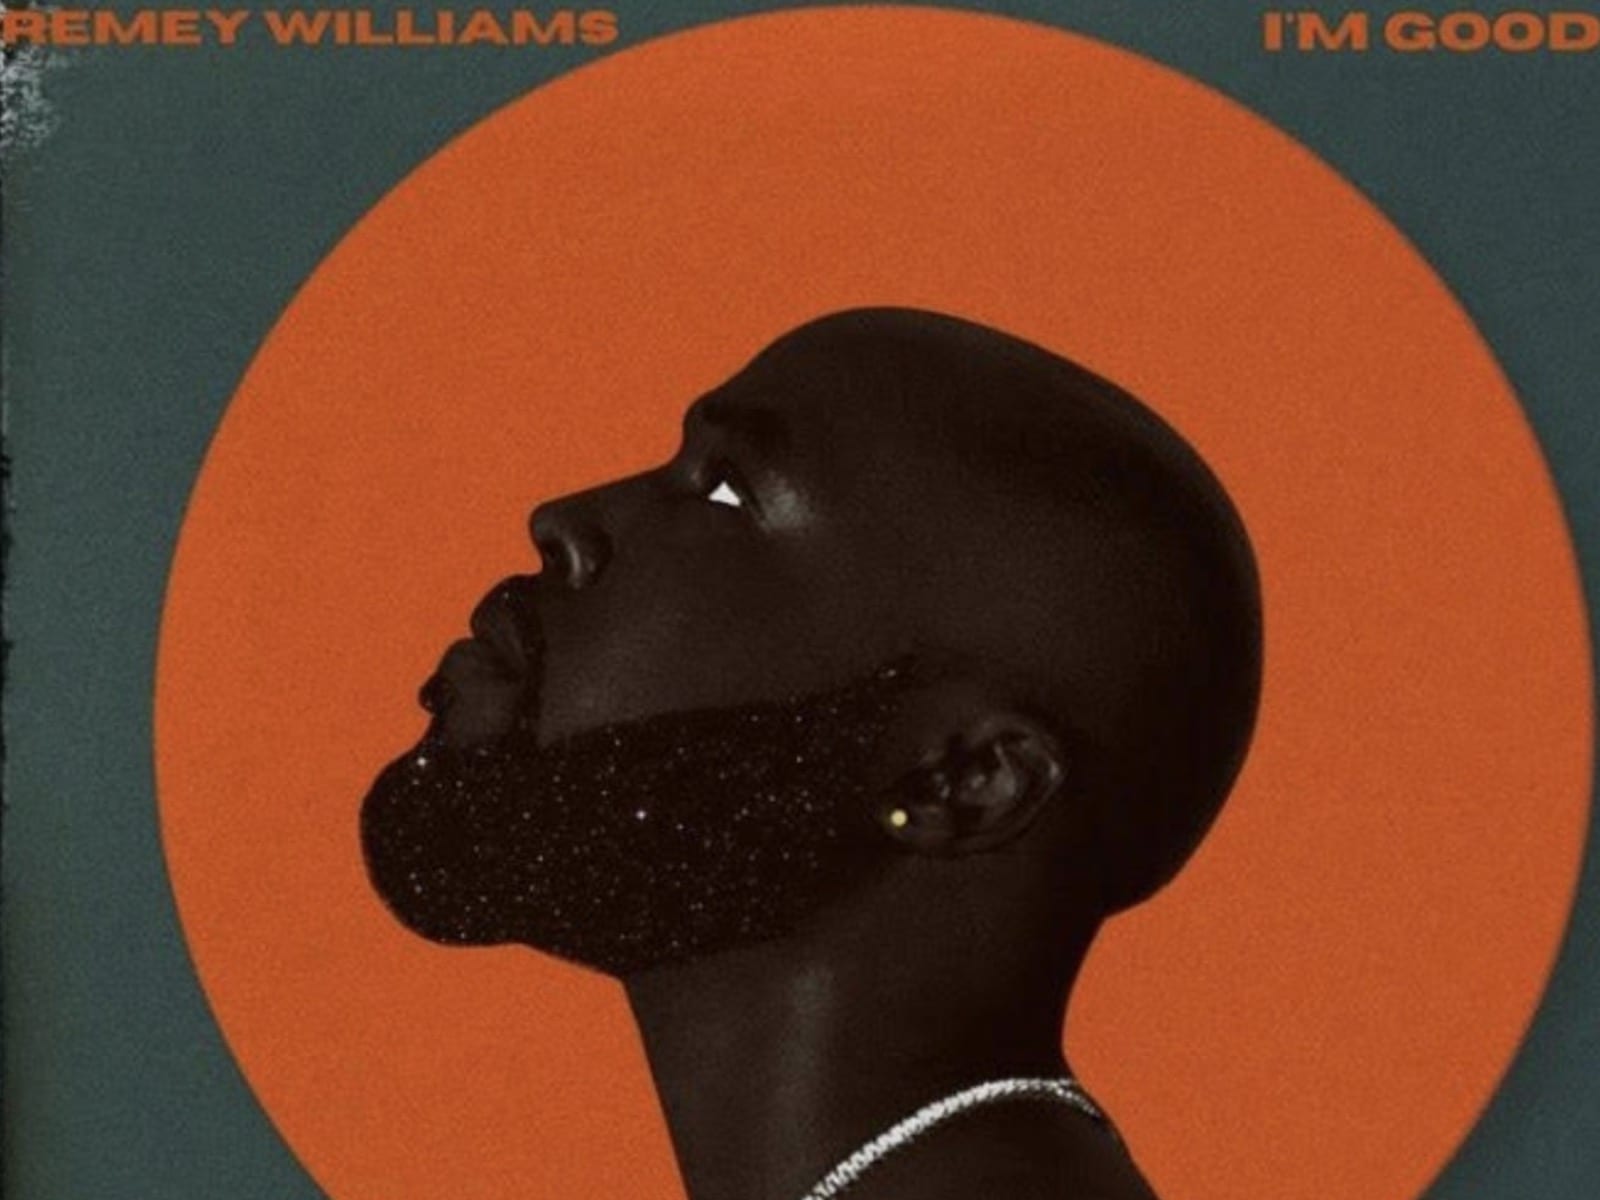 Listen: Summer Walker + Scotty ATL Affiliate Remey Williams Celebrates Black Men's Excellence W/ New I'm Good Single